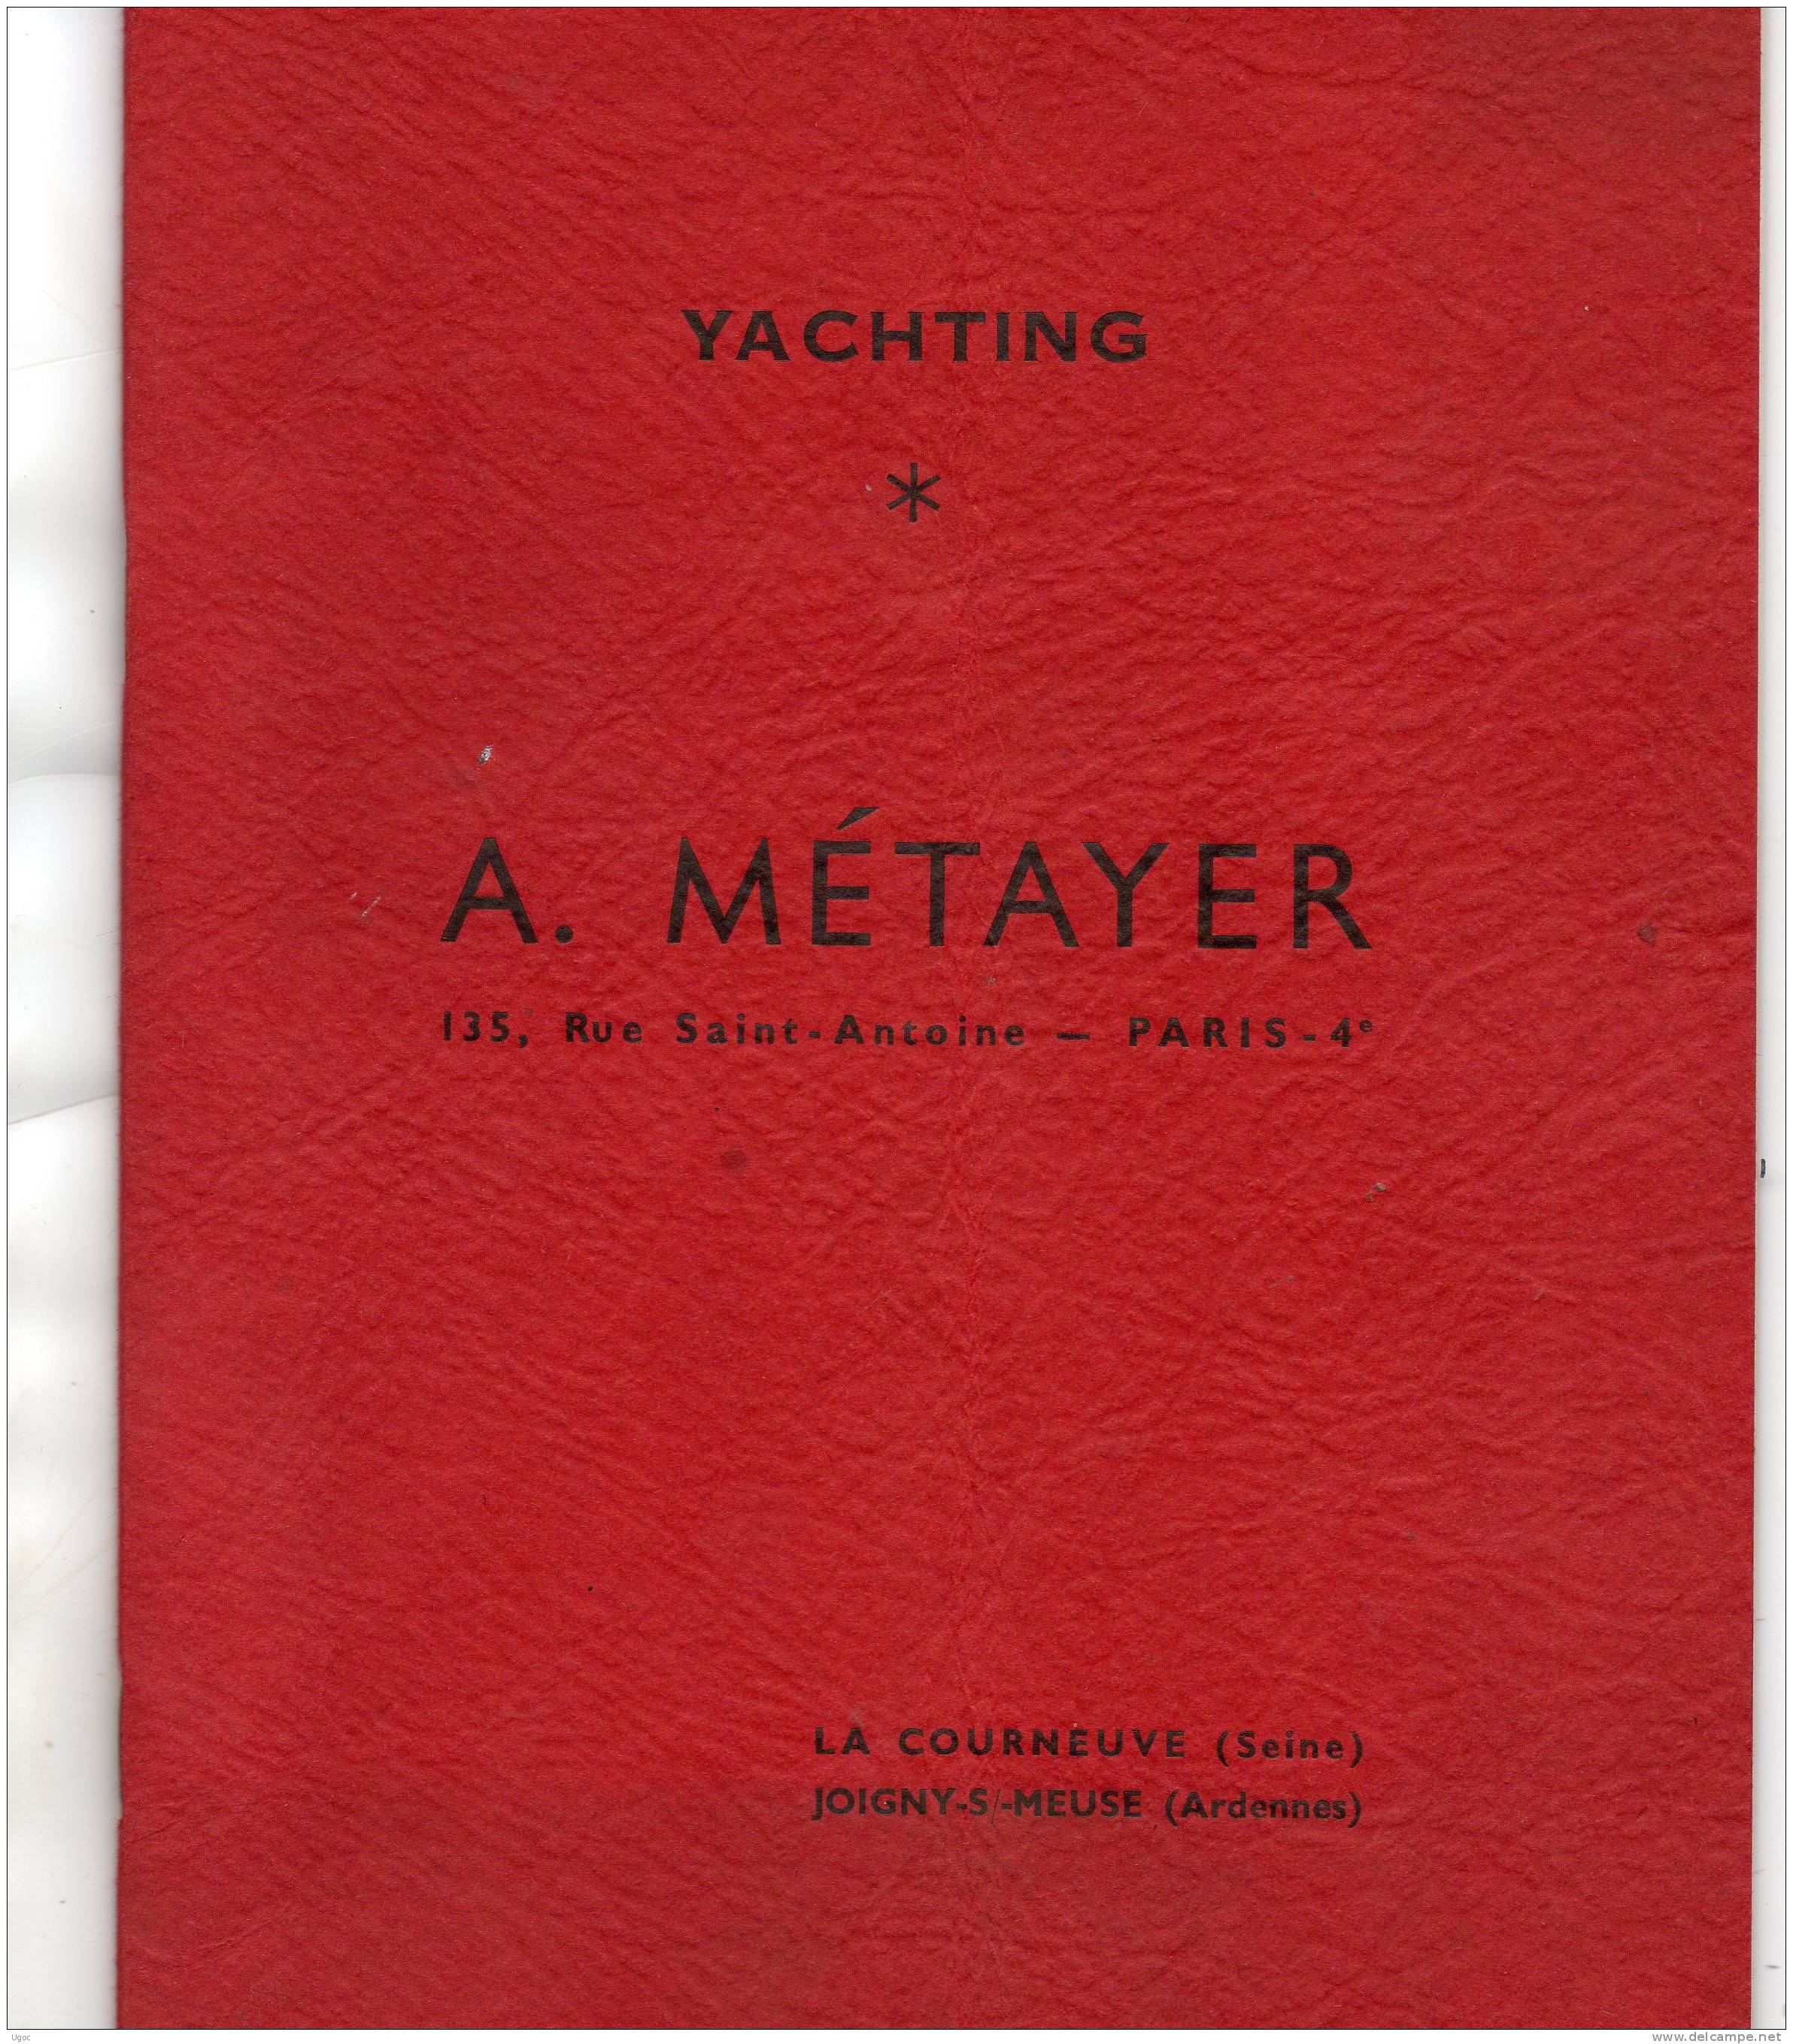 MANUFACTURE D´ARTICLES DE MARINE - A. METAYER - Nomenclature De 44 Pages - Mars 1952 - Supplies And Equipment